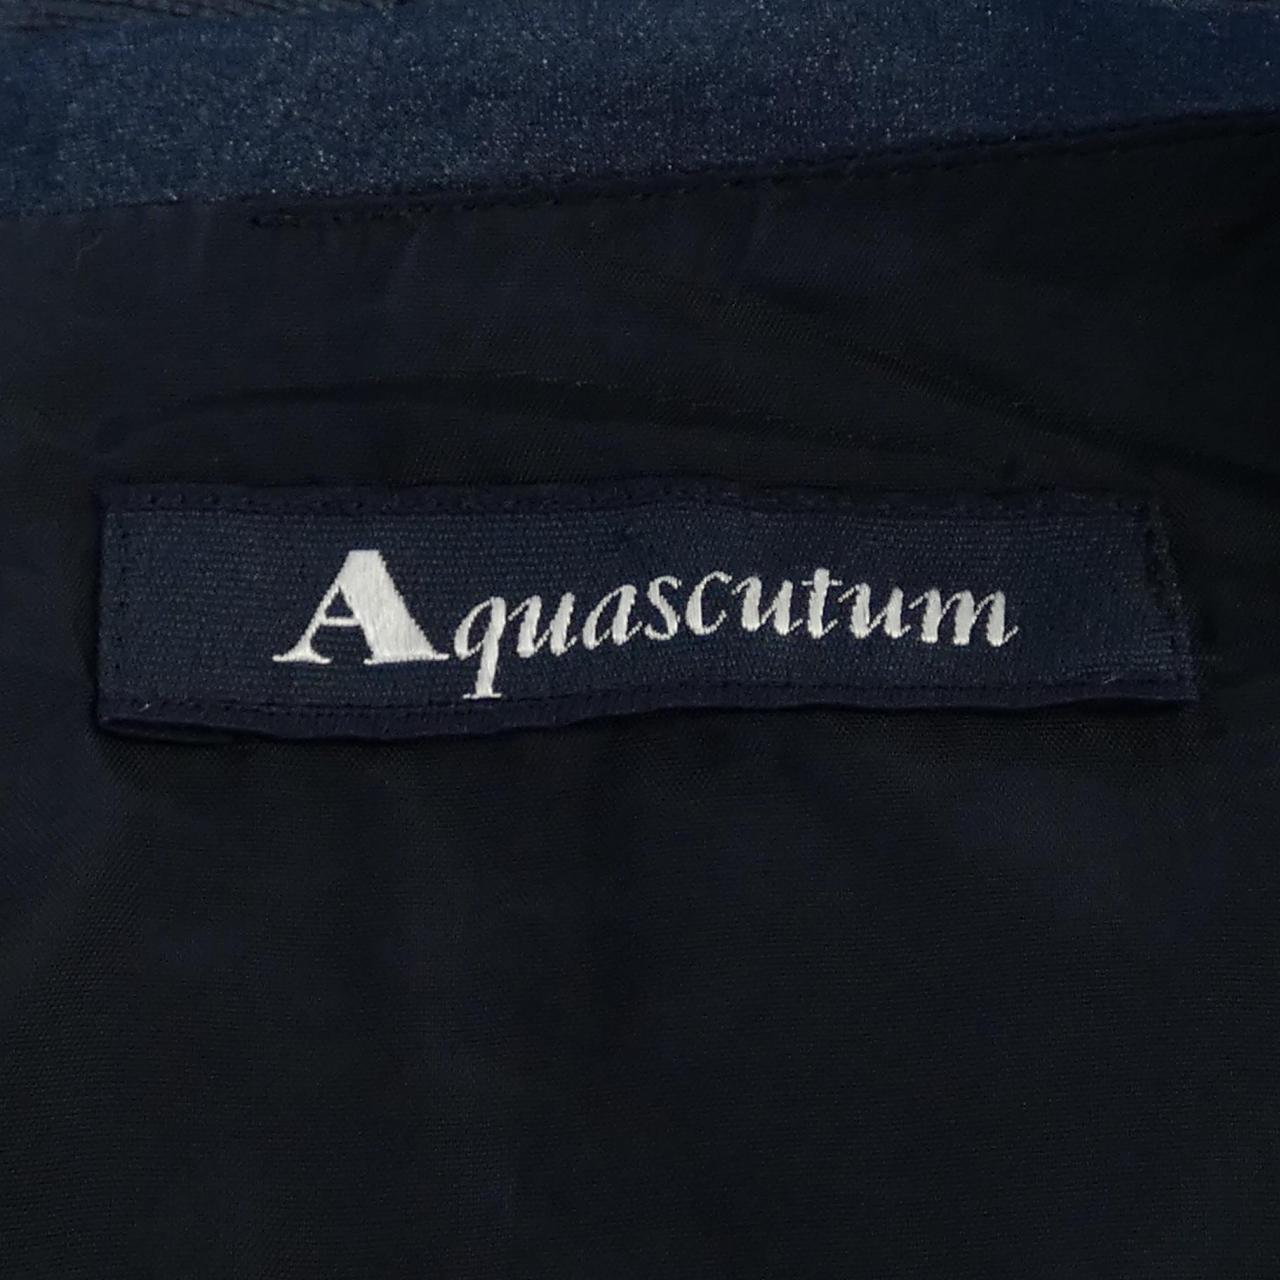 Aquascutum连衣裙